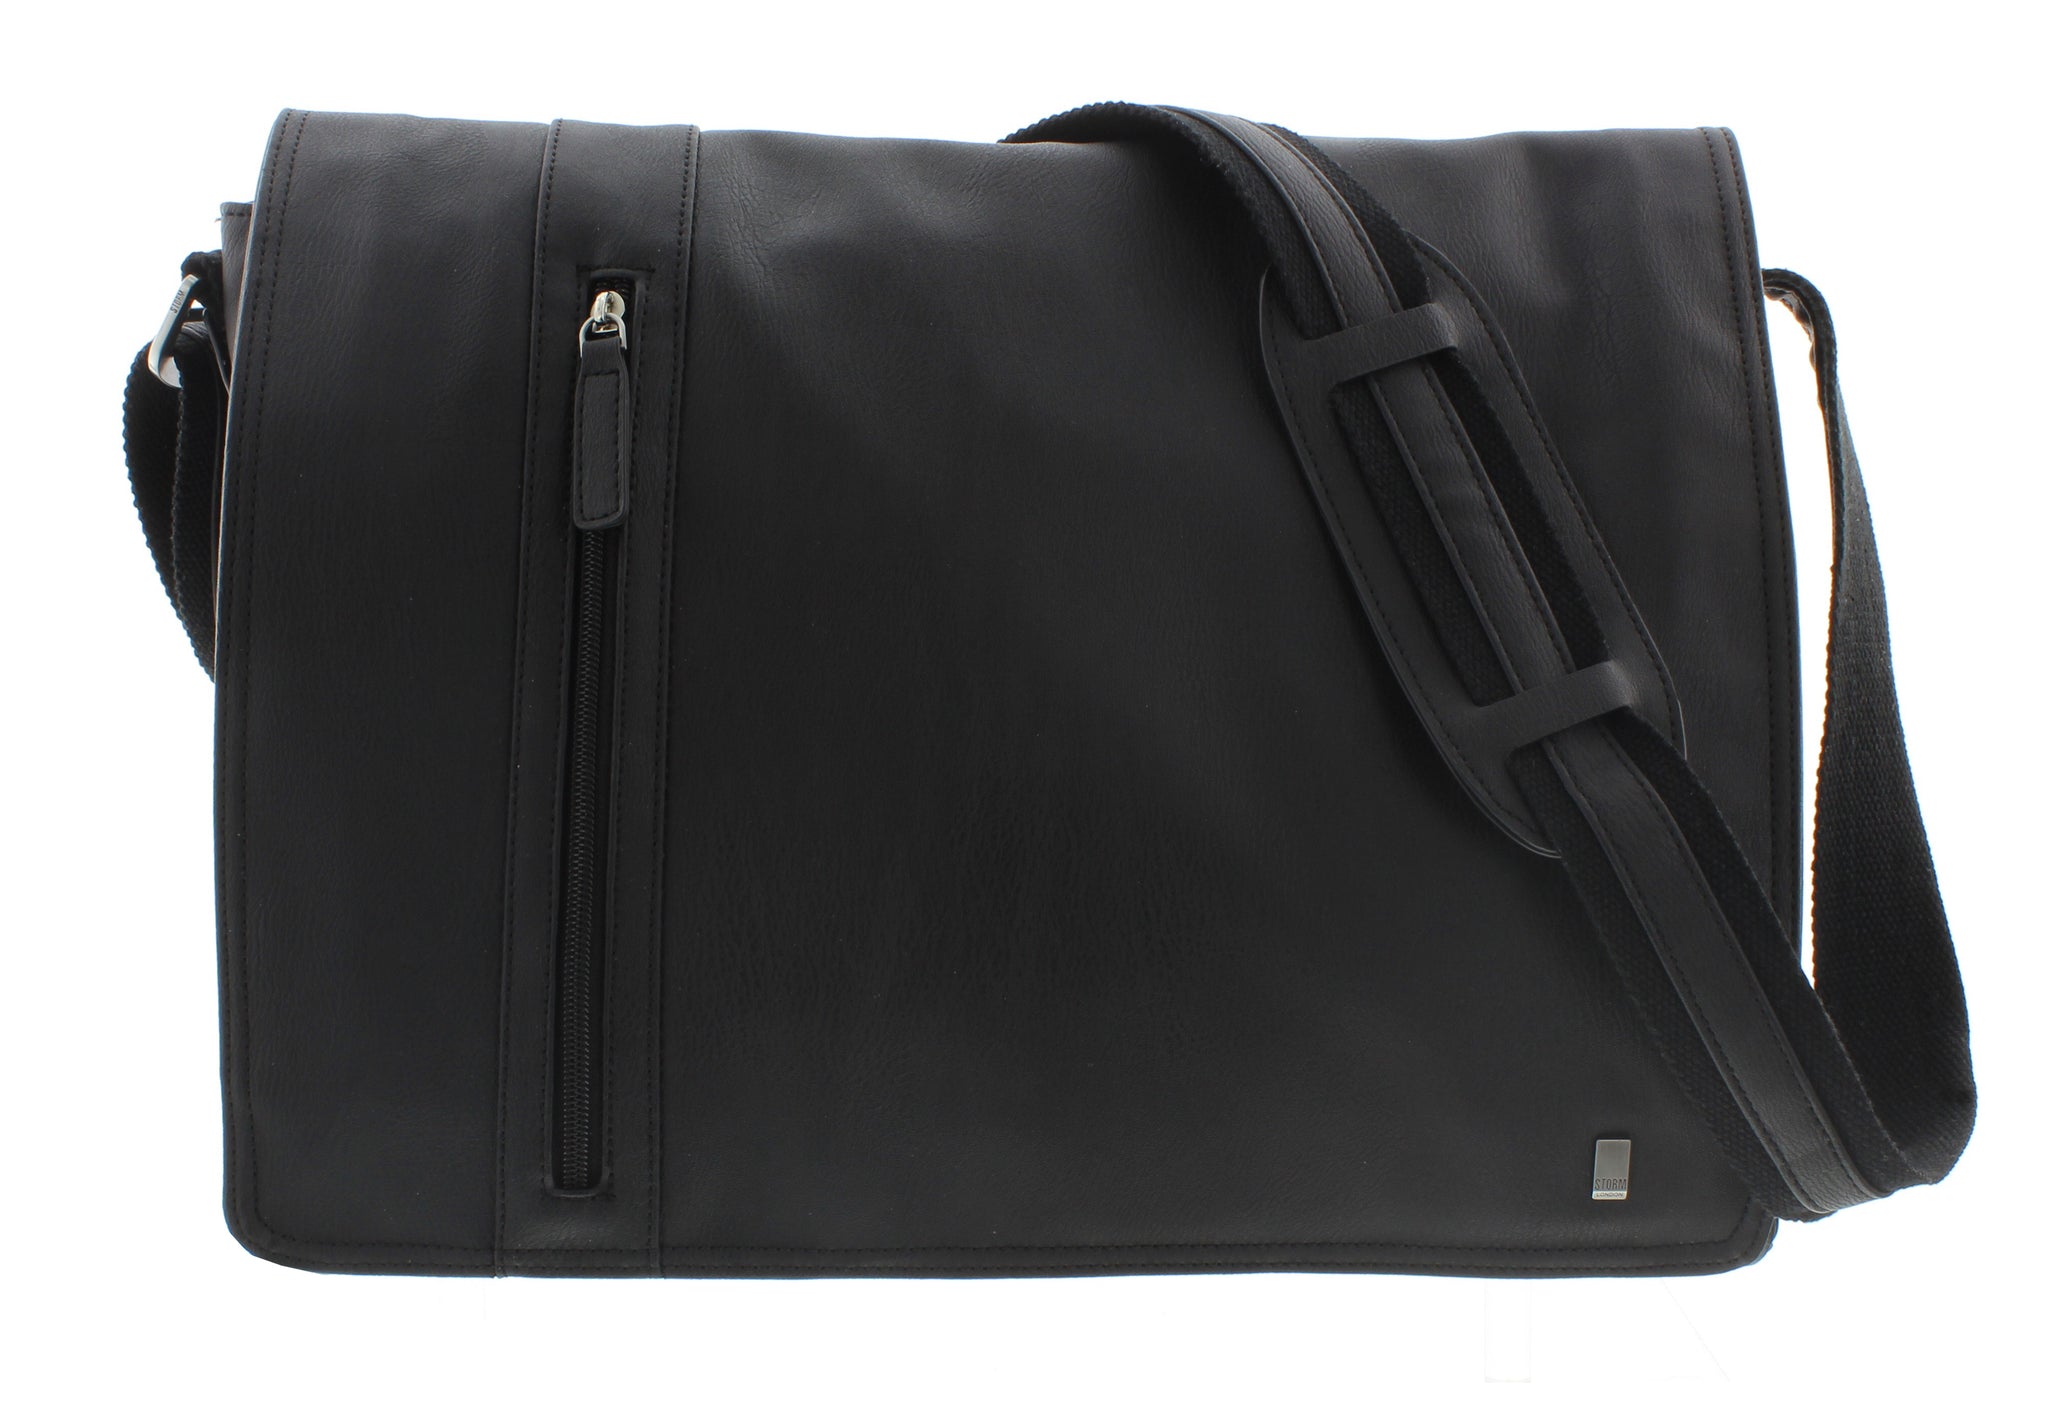 STORM London MALONE Messenger Laptop Bag in Black – London Bag